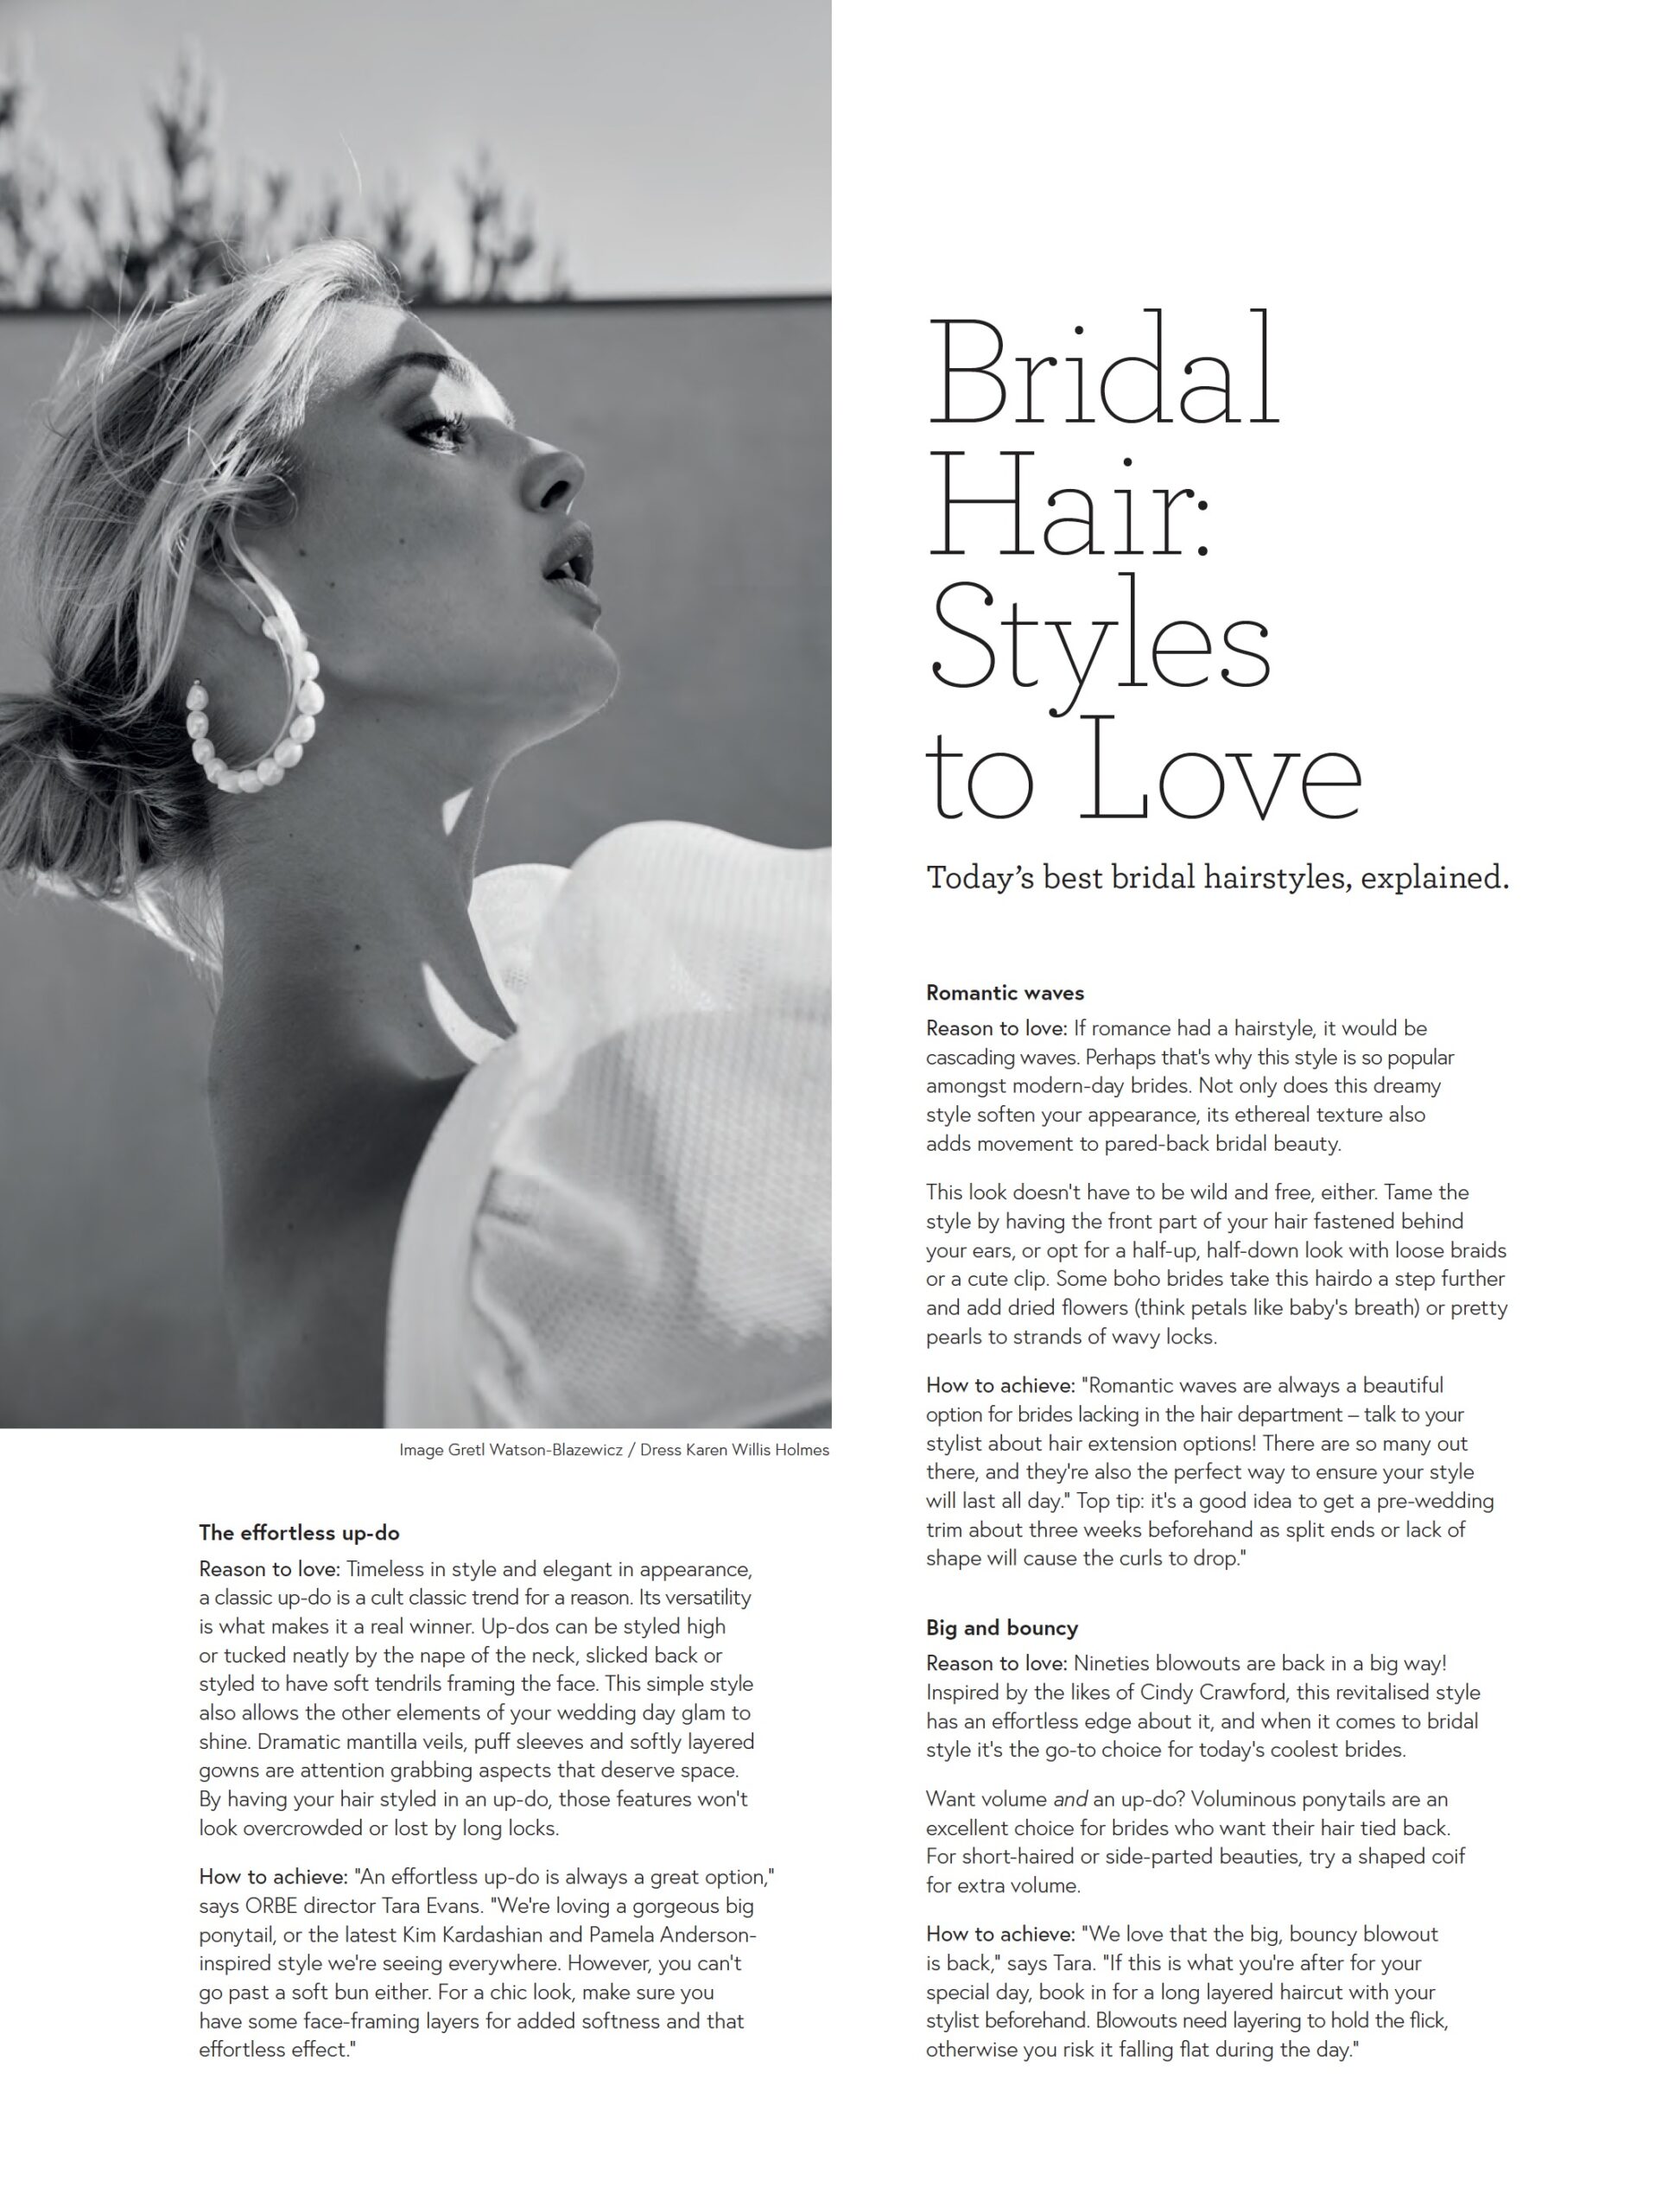 South Australian Weddings article Bridal hair styles to love, ORBE Hair Tara Evans